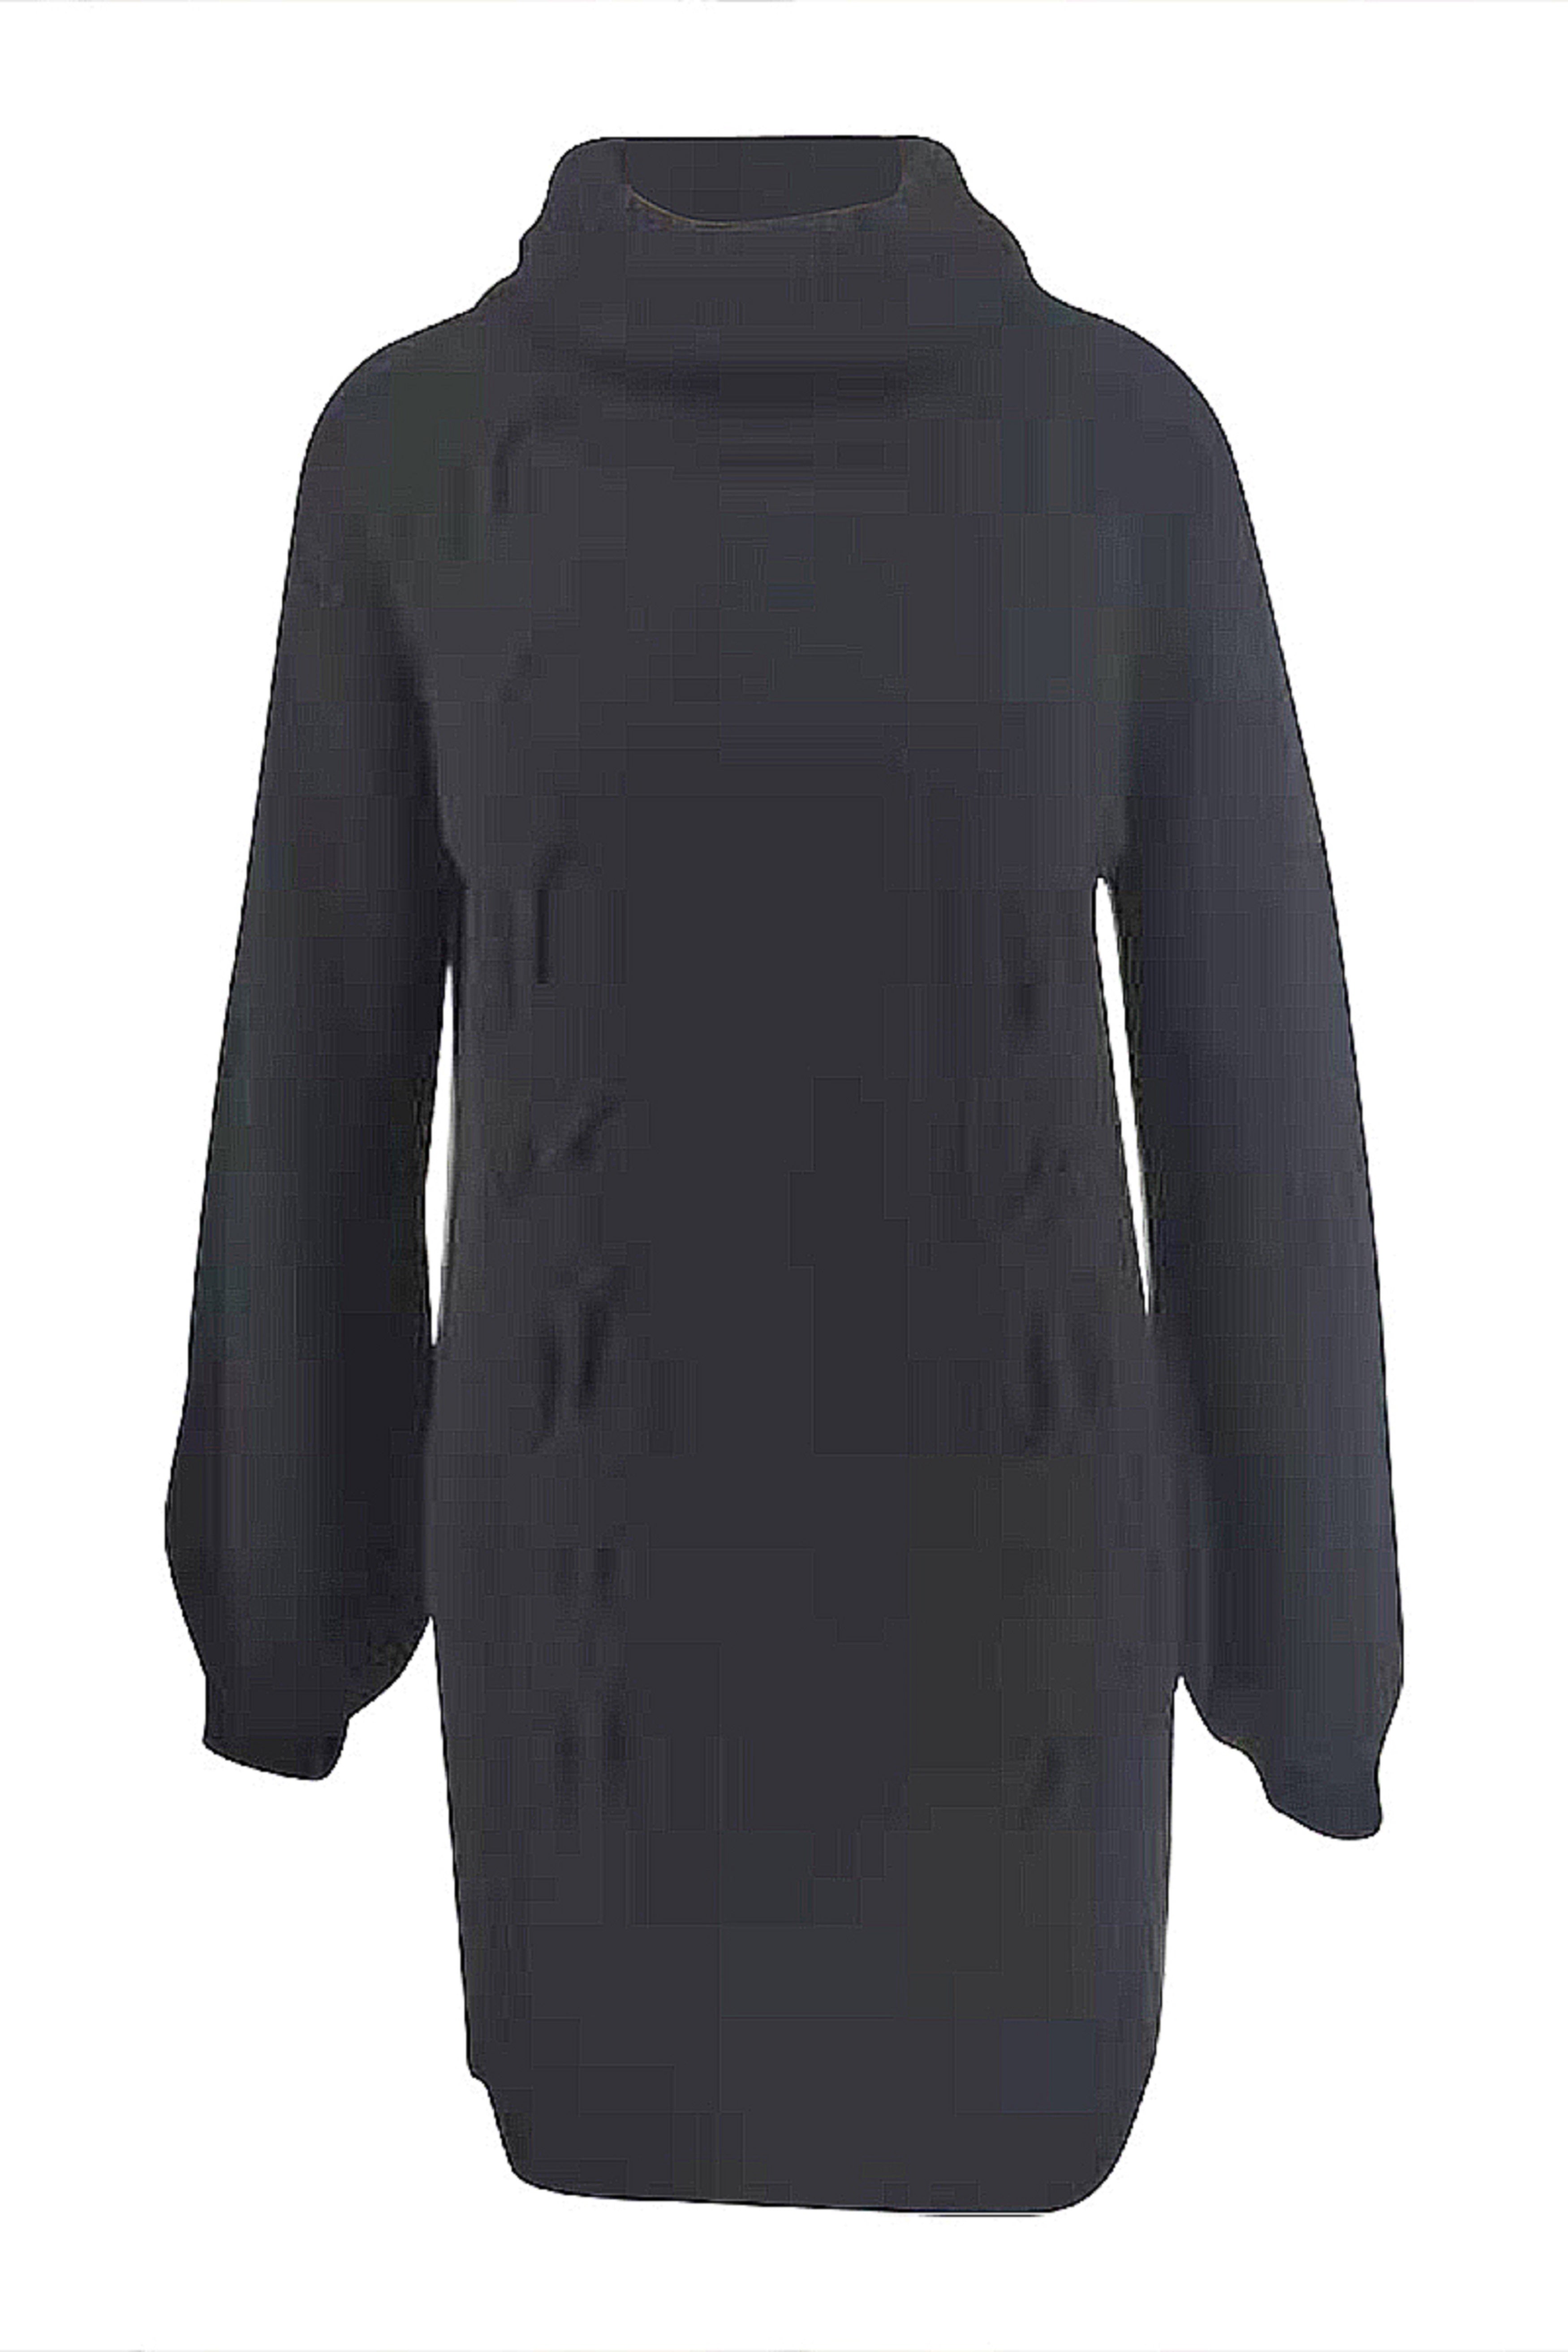 Merino Wool Cashmere | Turtle Neck Sweater | Women Turtle Neck Long Sleeve Sweater | Bellemere New York